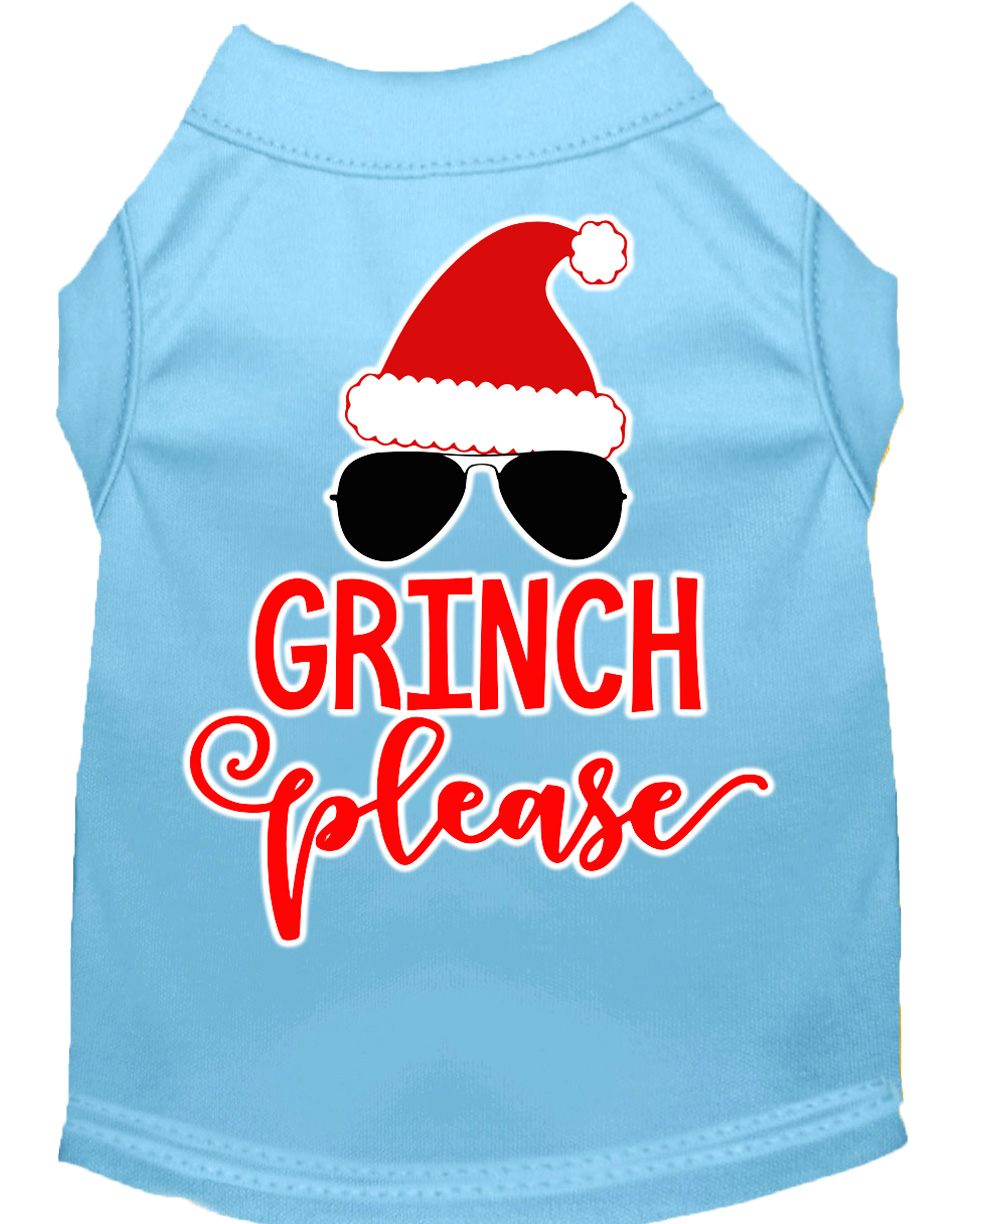 Grinch Please Screen Print Dog Shirt Baby Blue XXXL